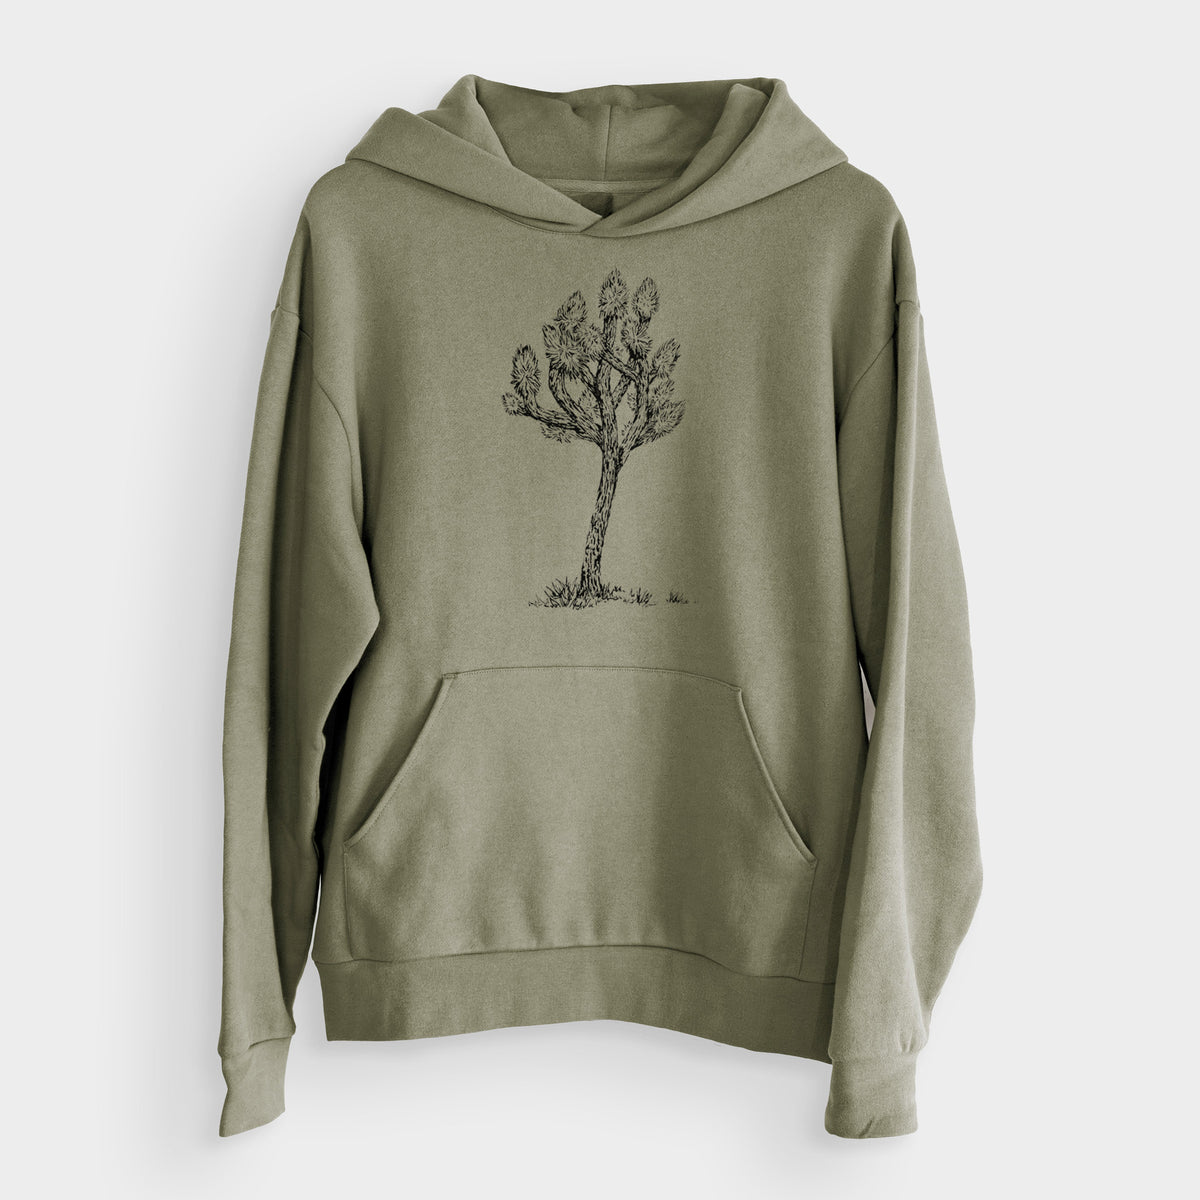 Yucca brevifolia - Joshua Tree  - Bodega Midweight Hoodie